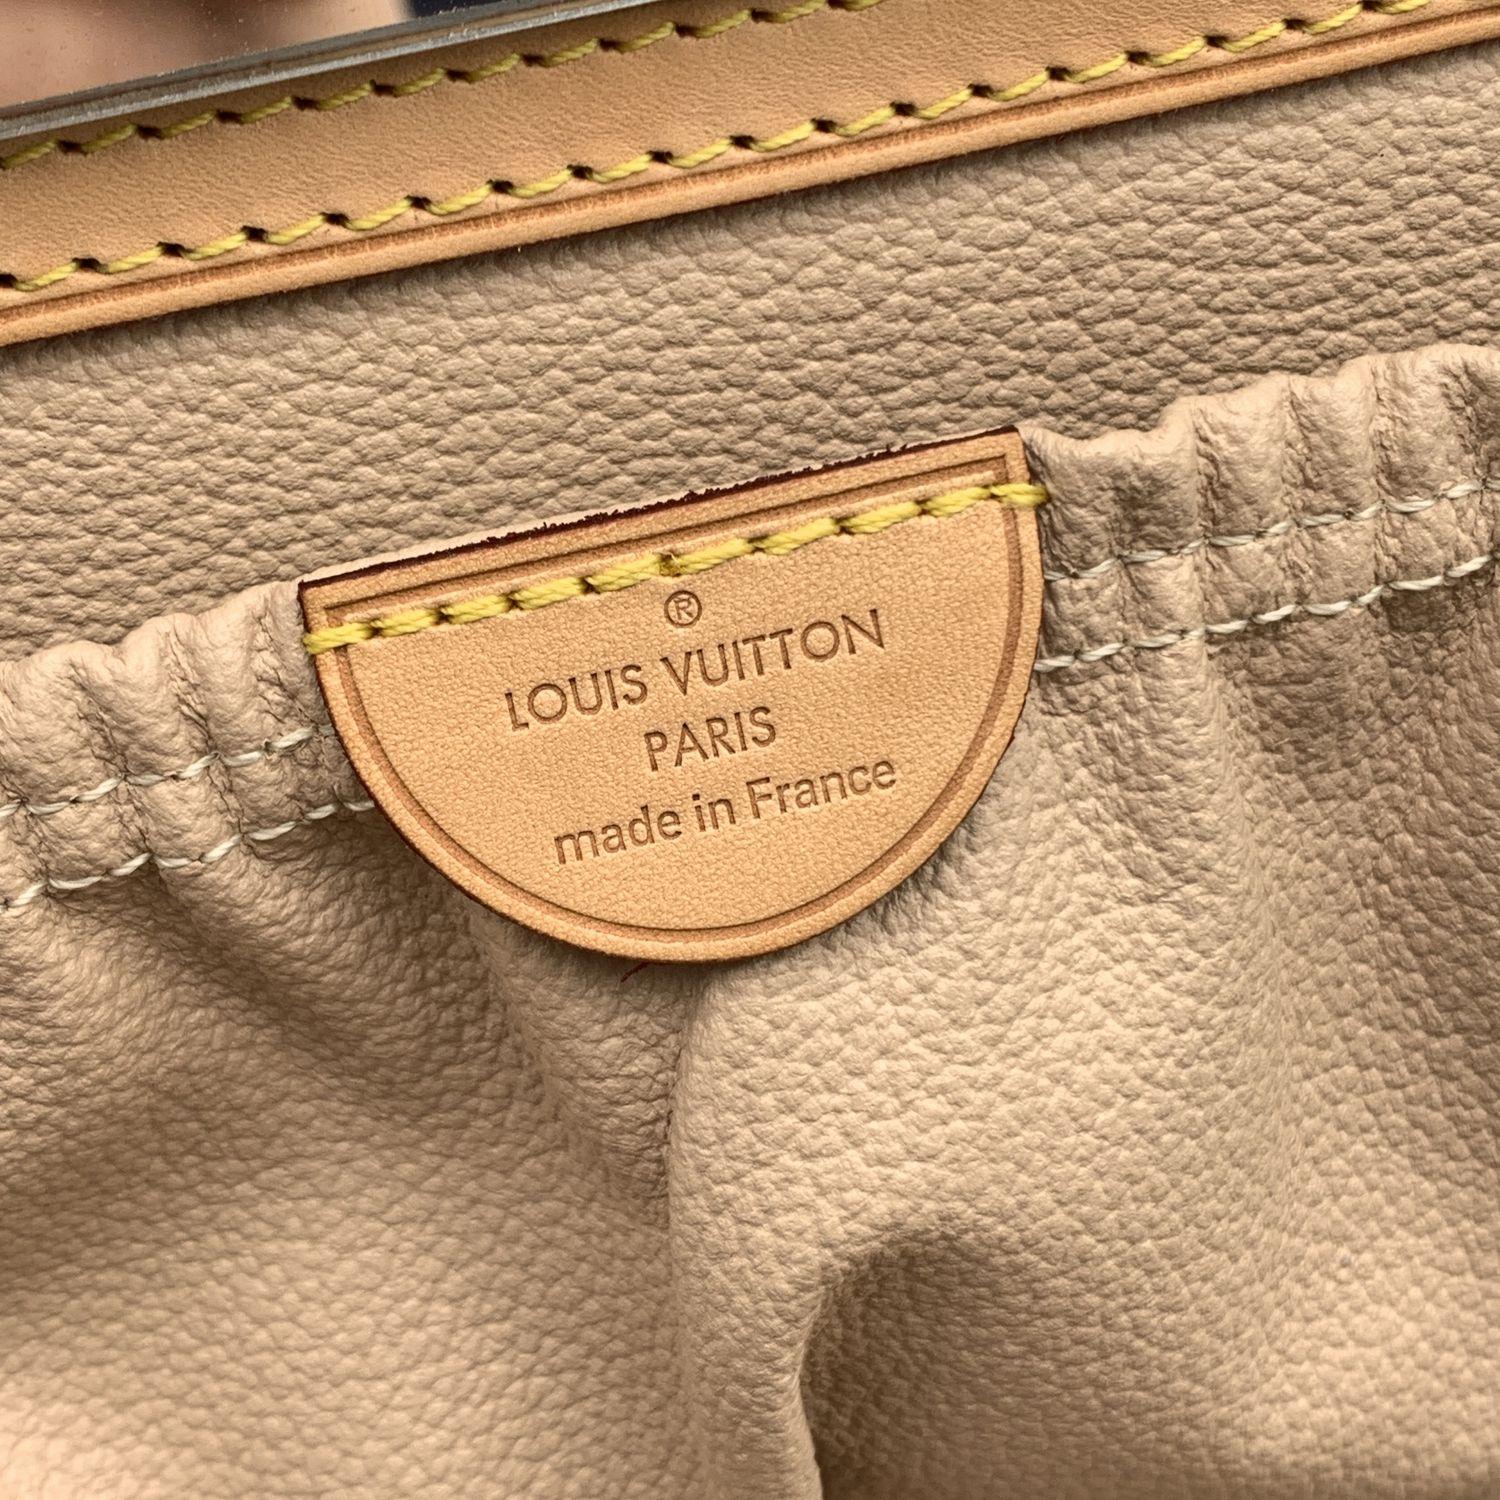 Louis Vuitton Monogram Canvas Nice Train Case Beauty Bag Handbag 5